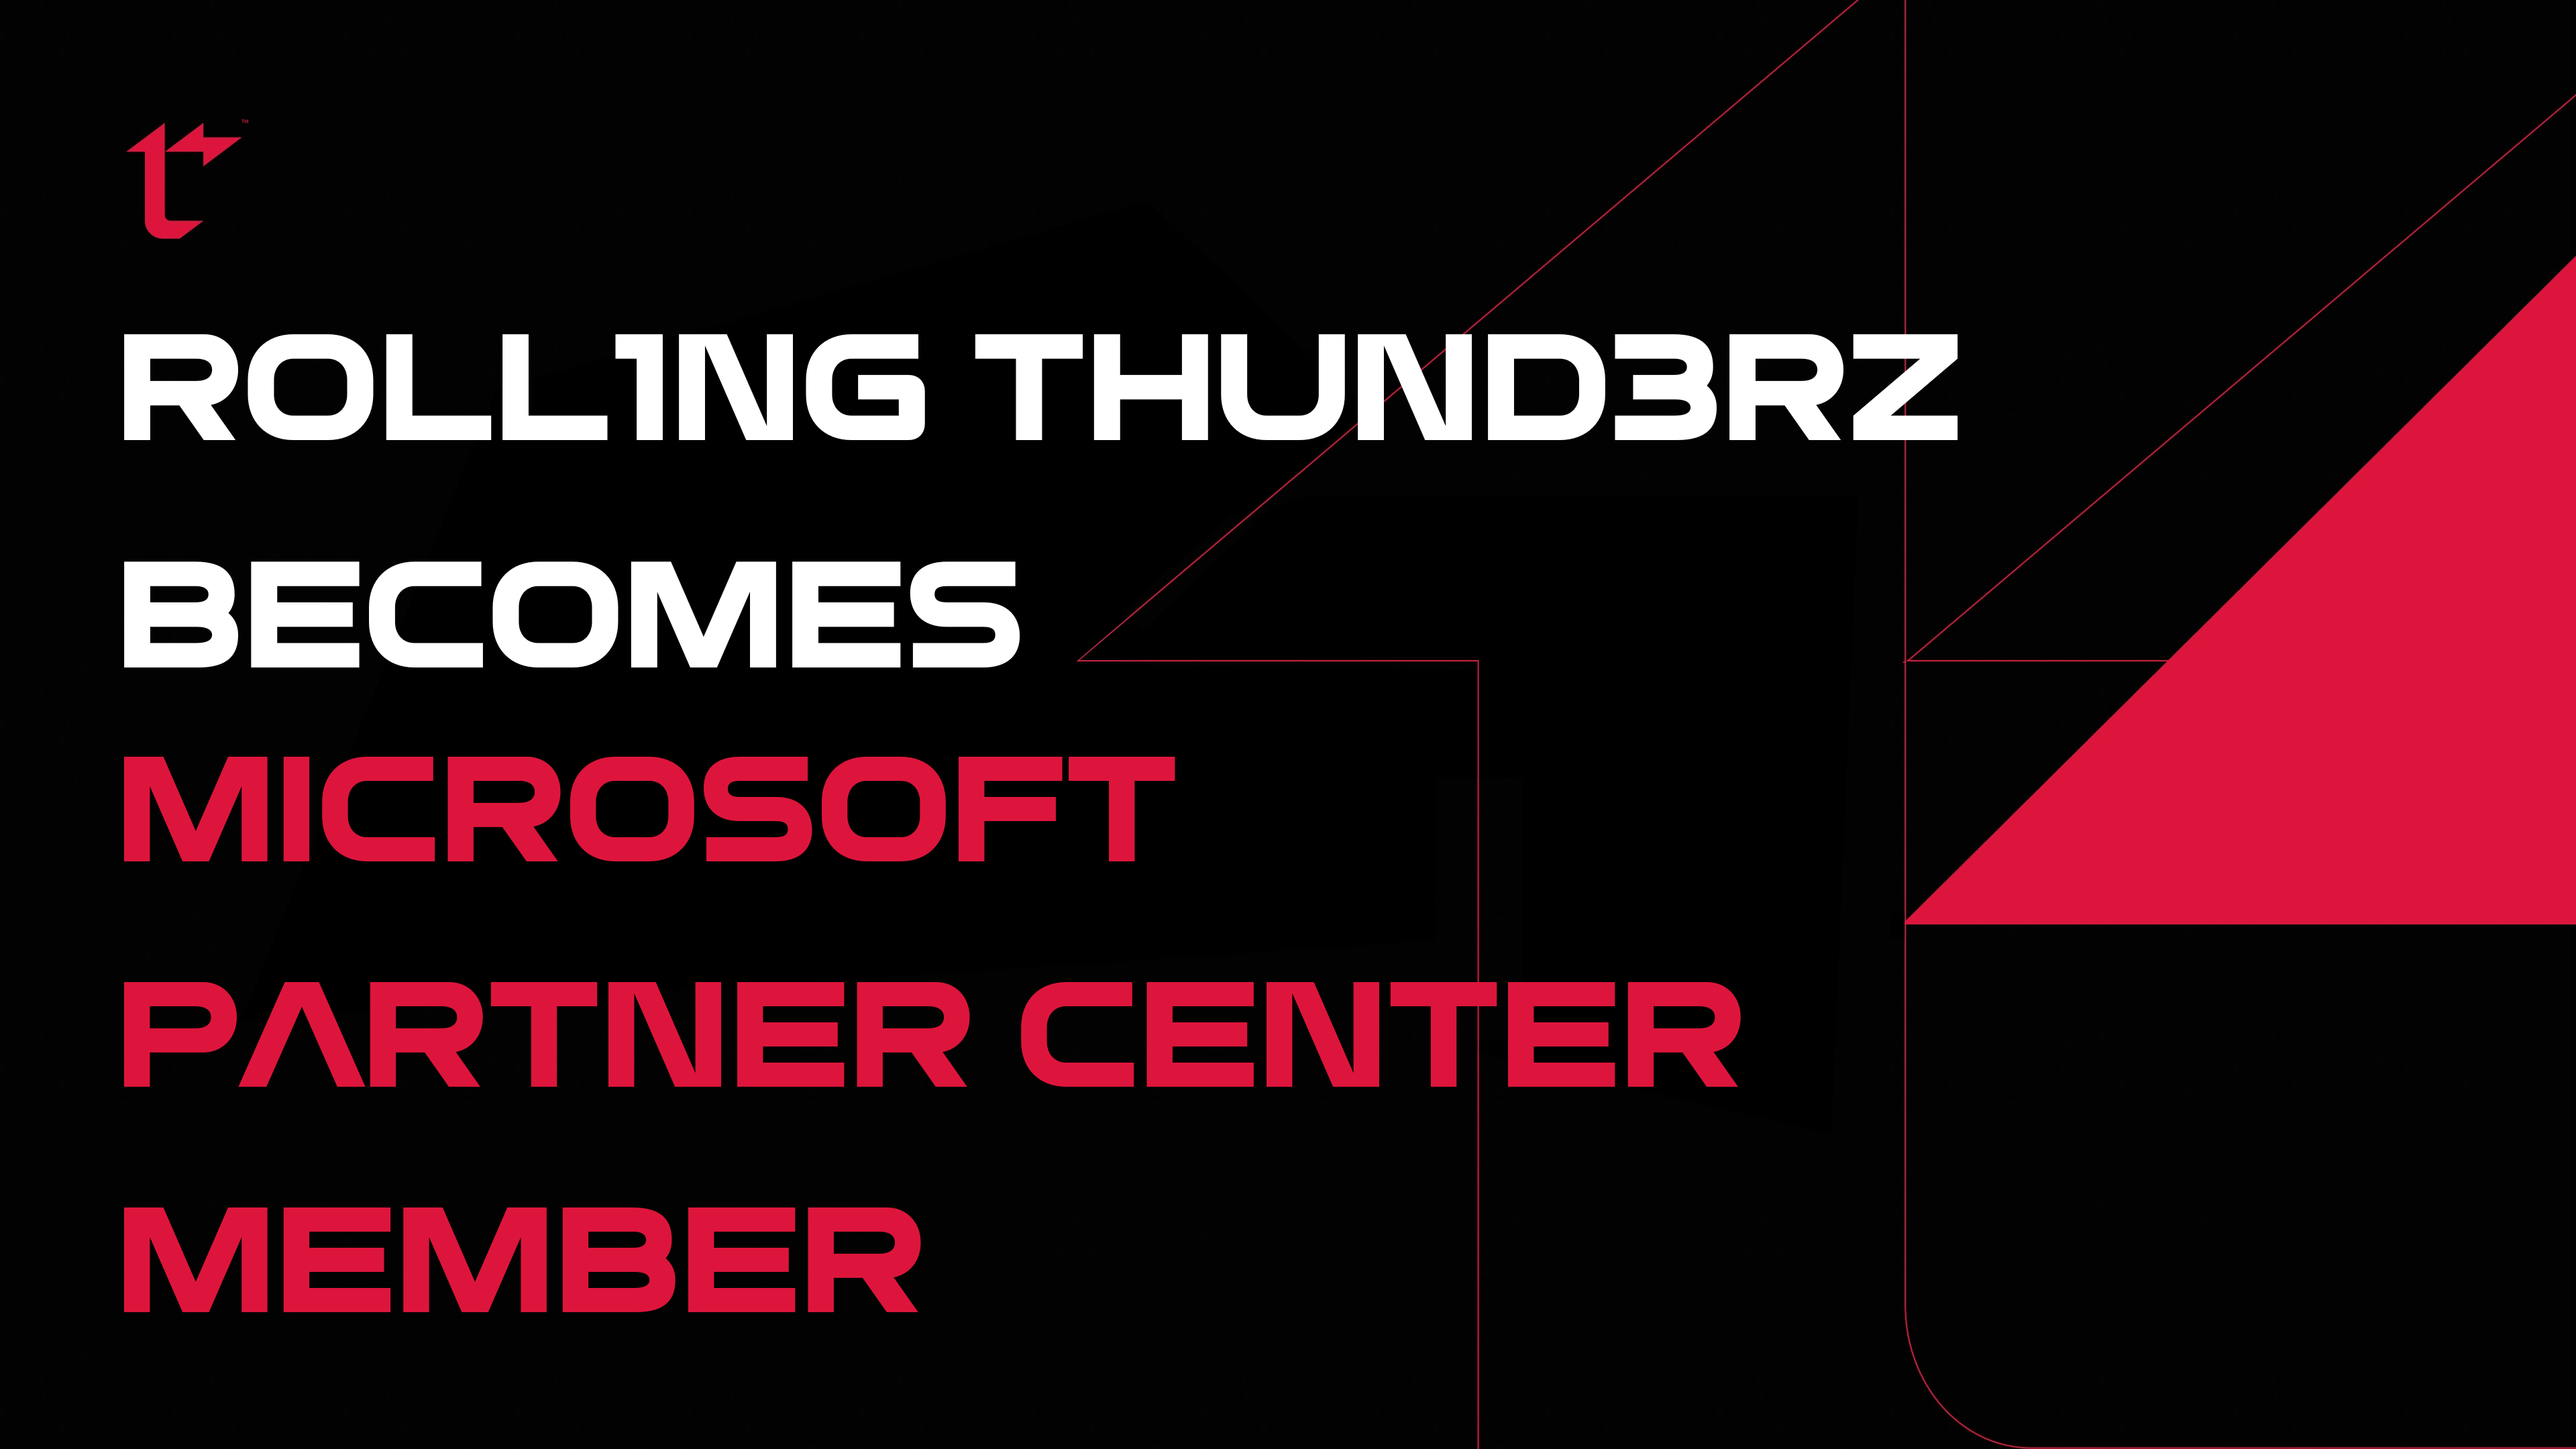 Roll1ng Thund3rz becomes Microsoft Partner Center member